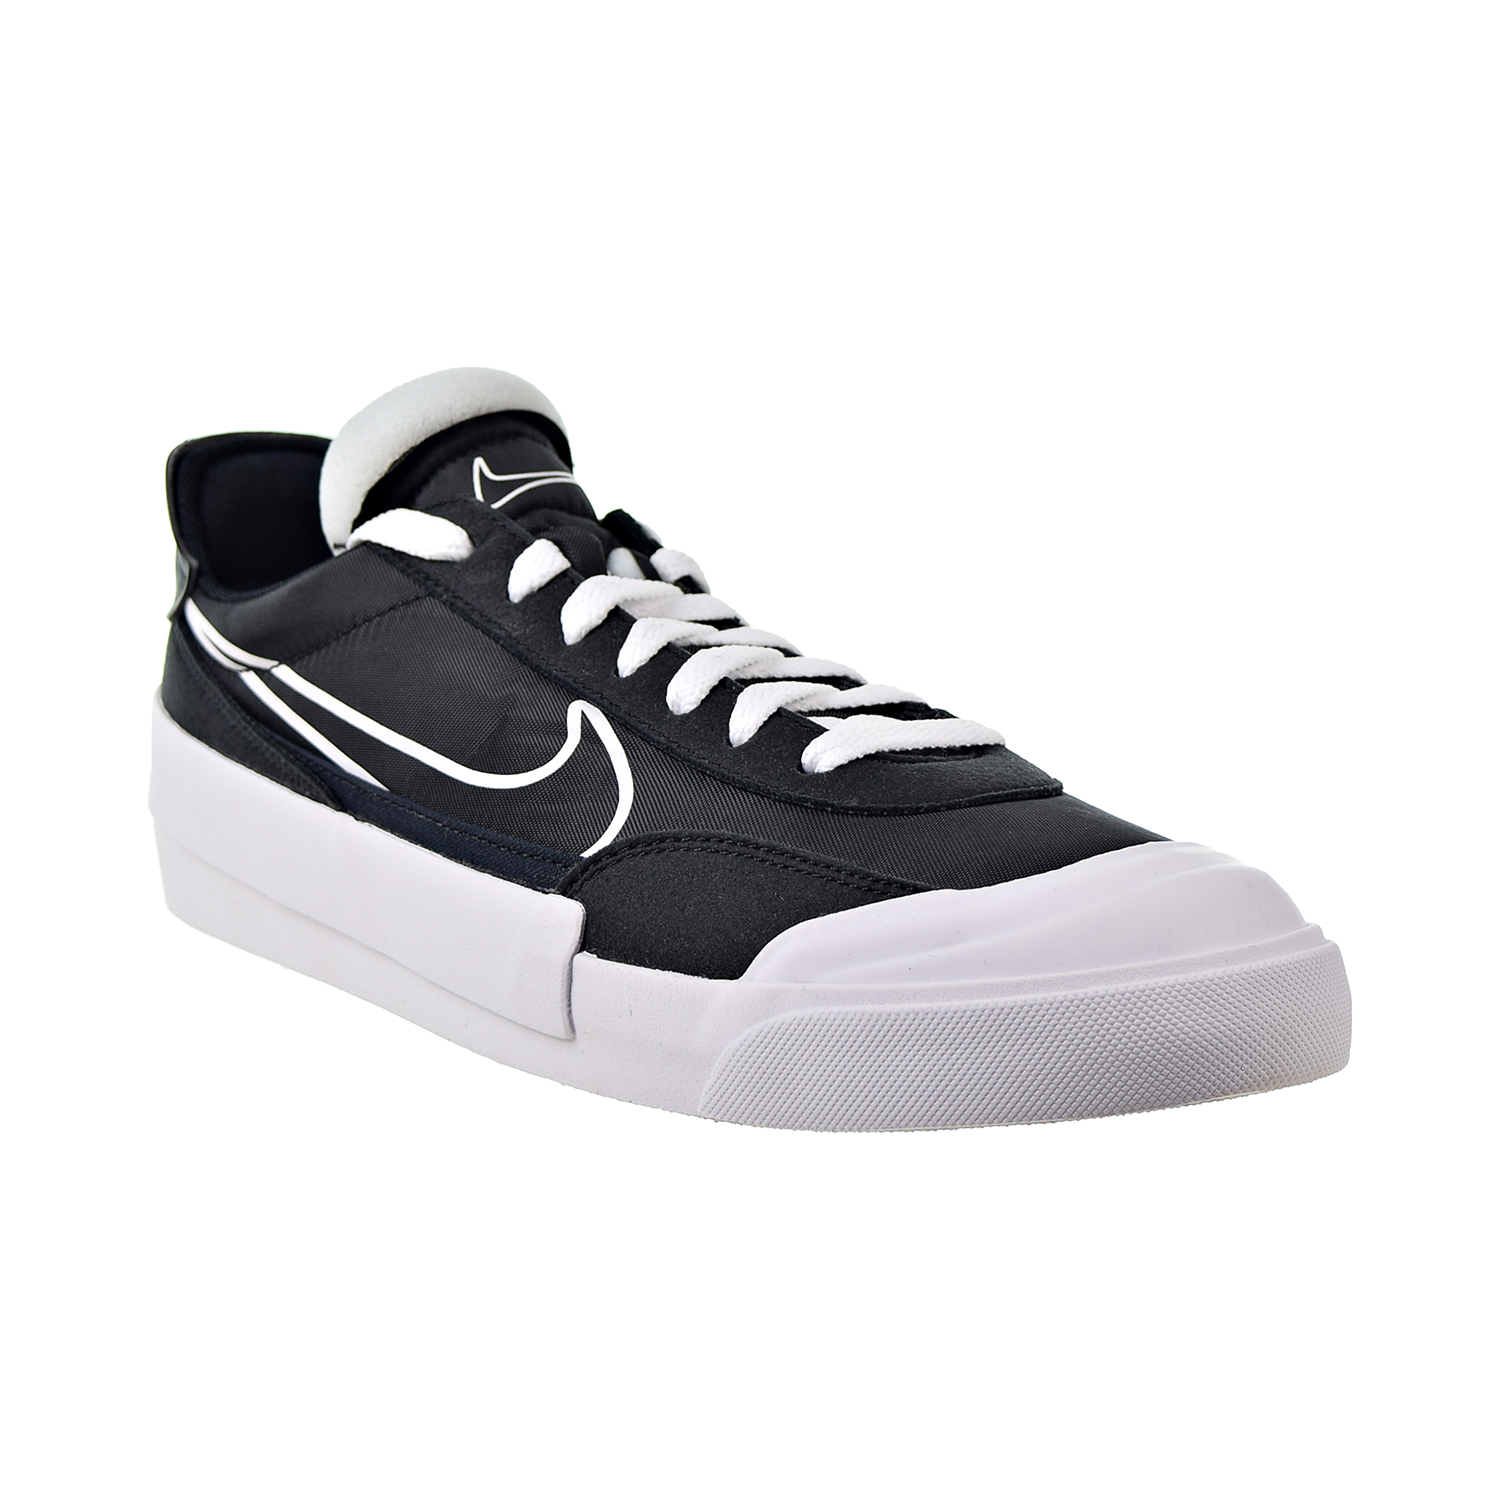 Nike Drop-Type Hybrid Men's Shoes Black-White cq0989-002 - image 2 of 6